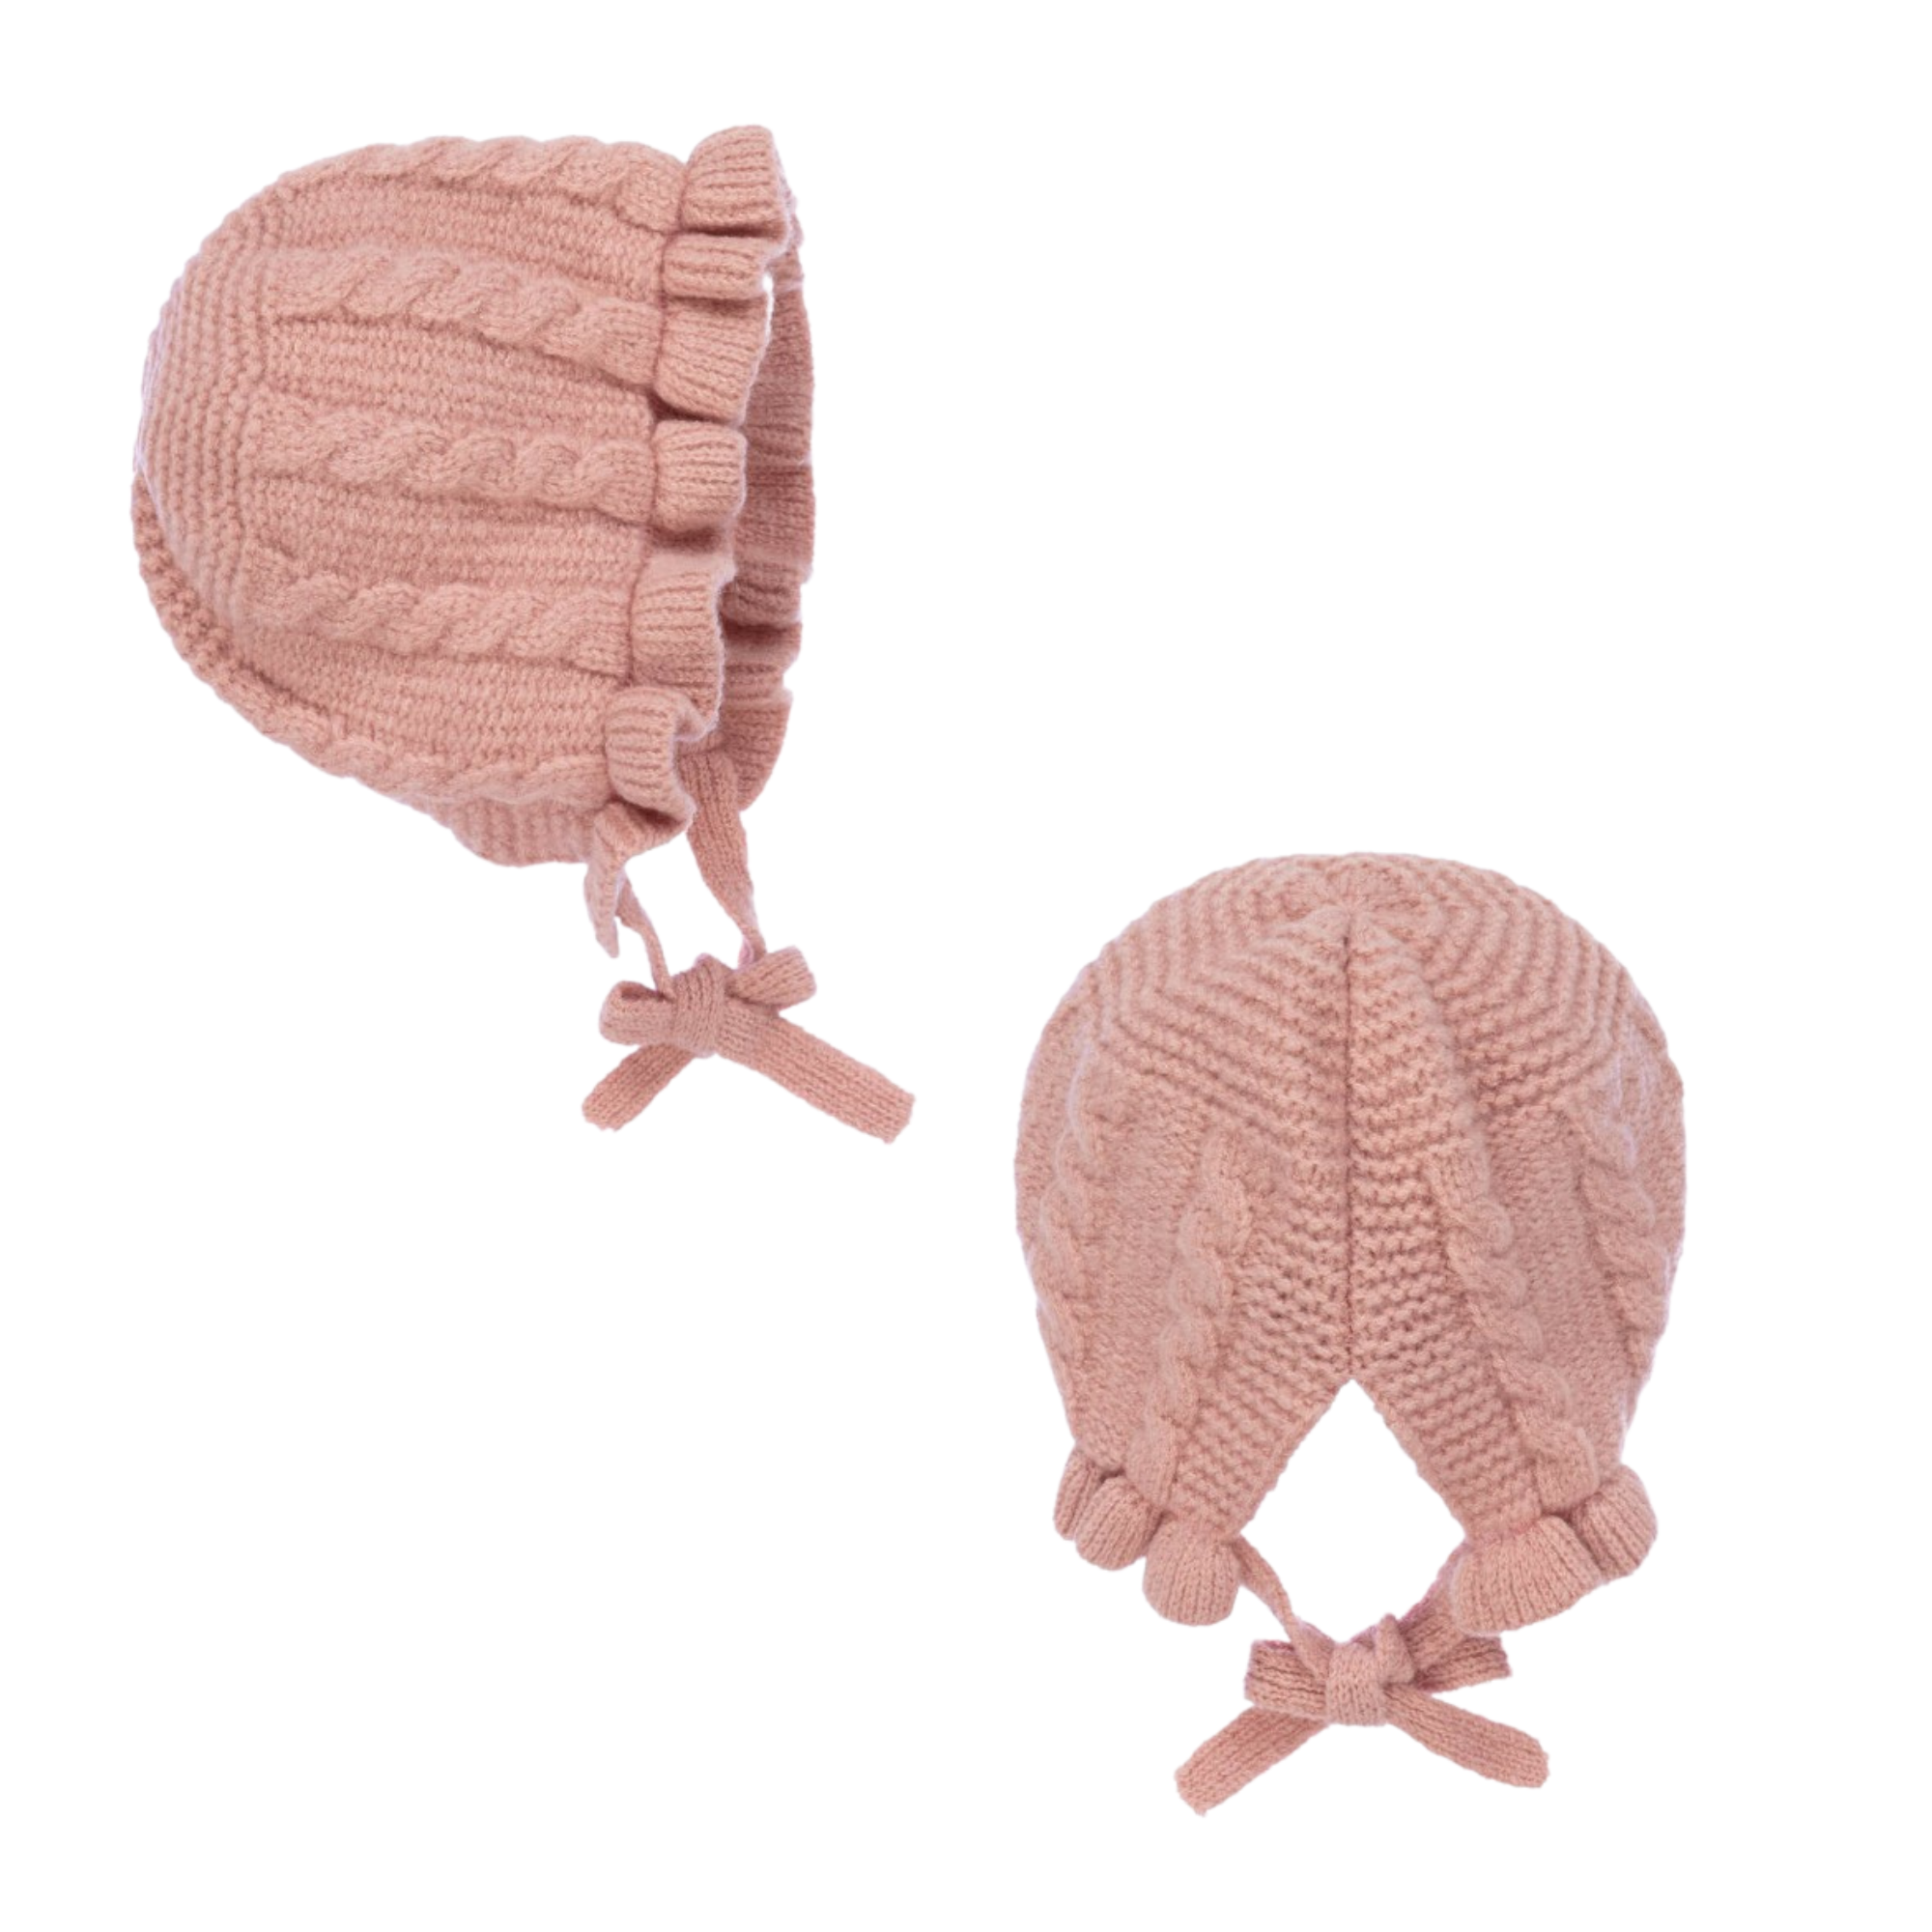 Woolen ruffle bonnet - winter hat for baby or toddler